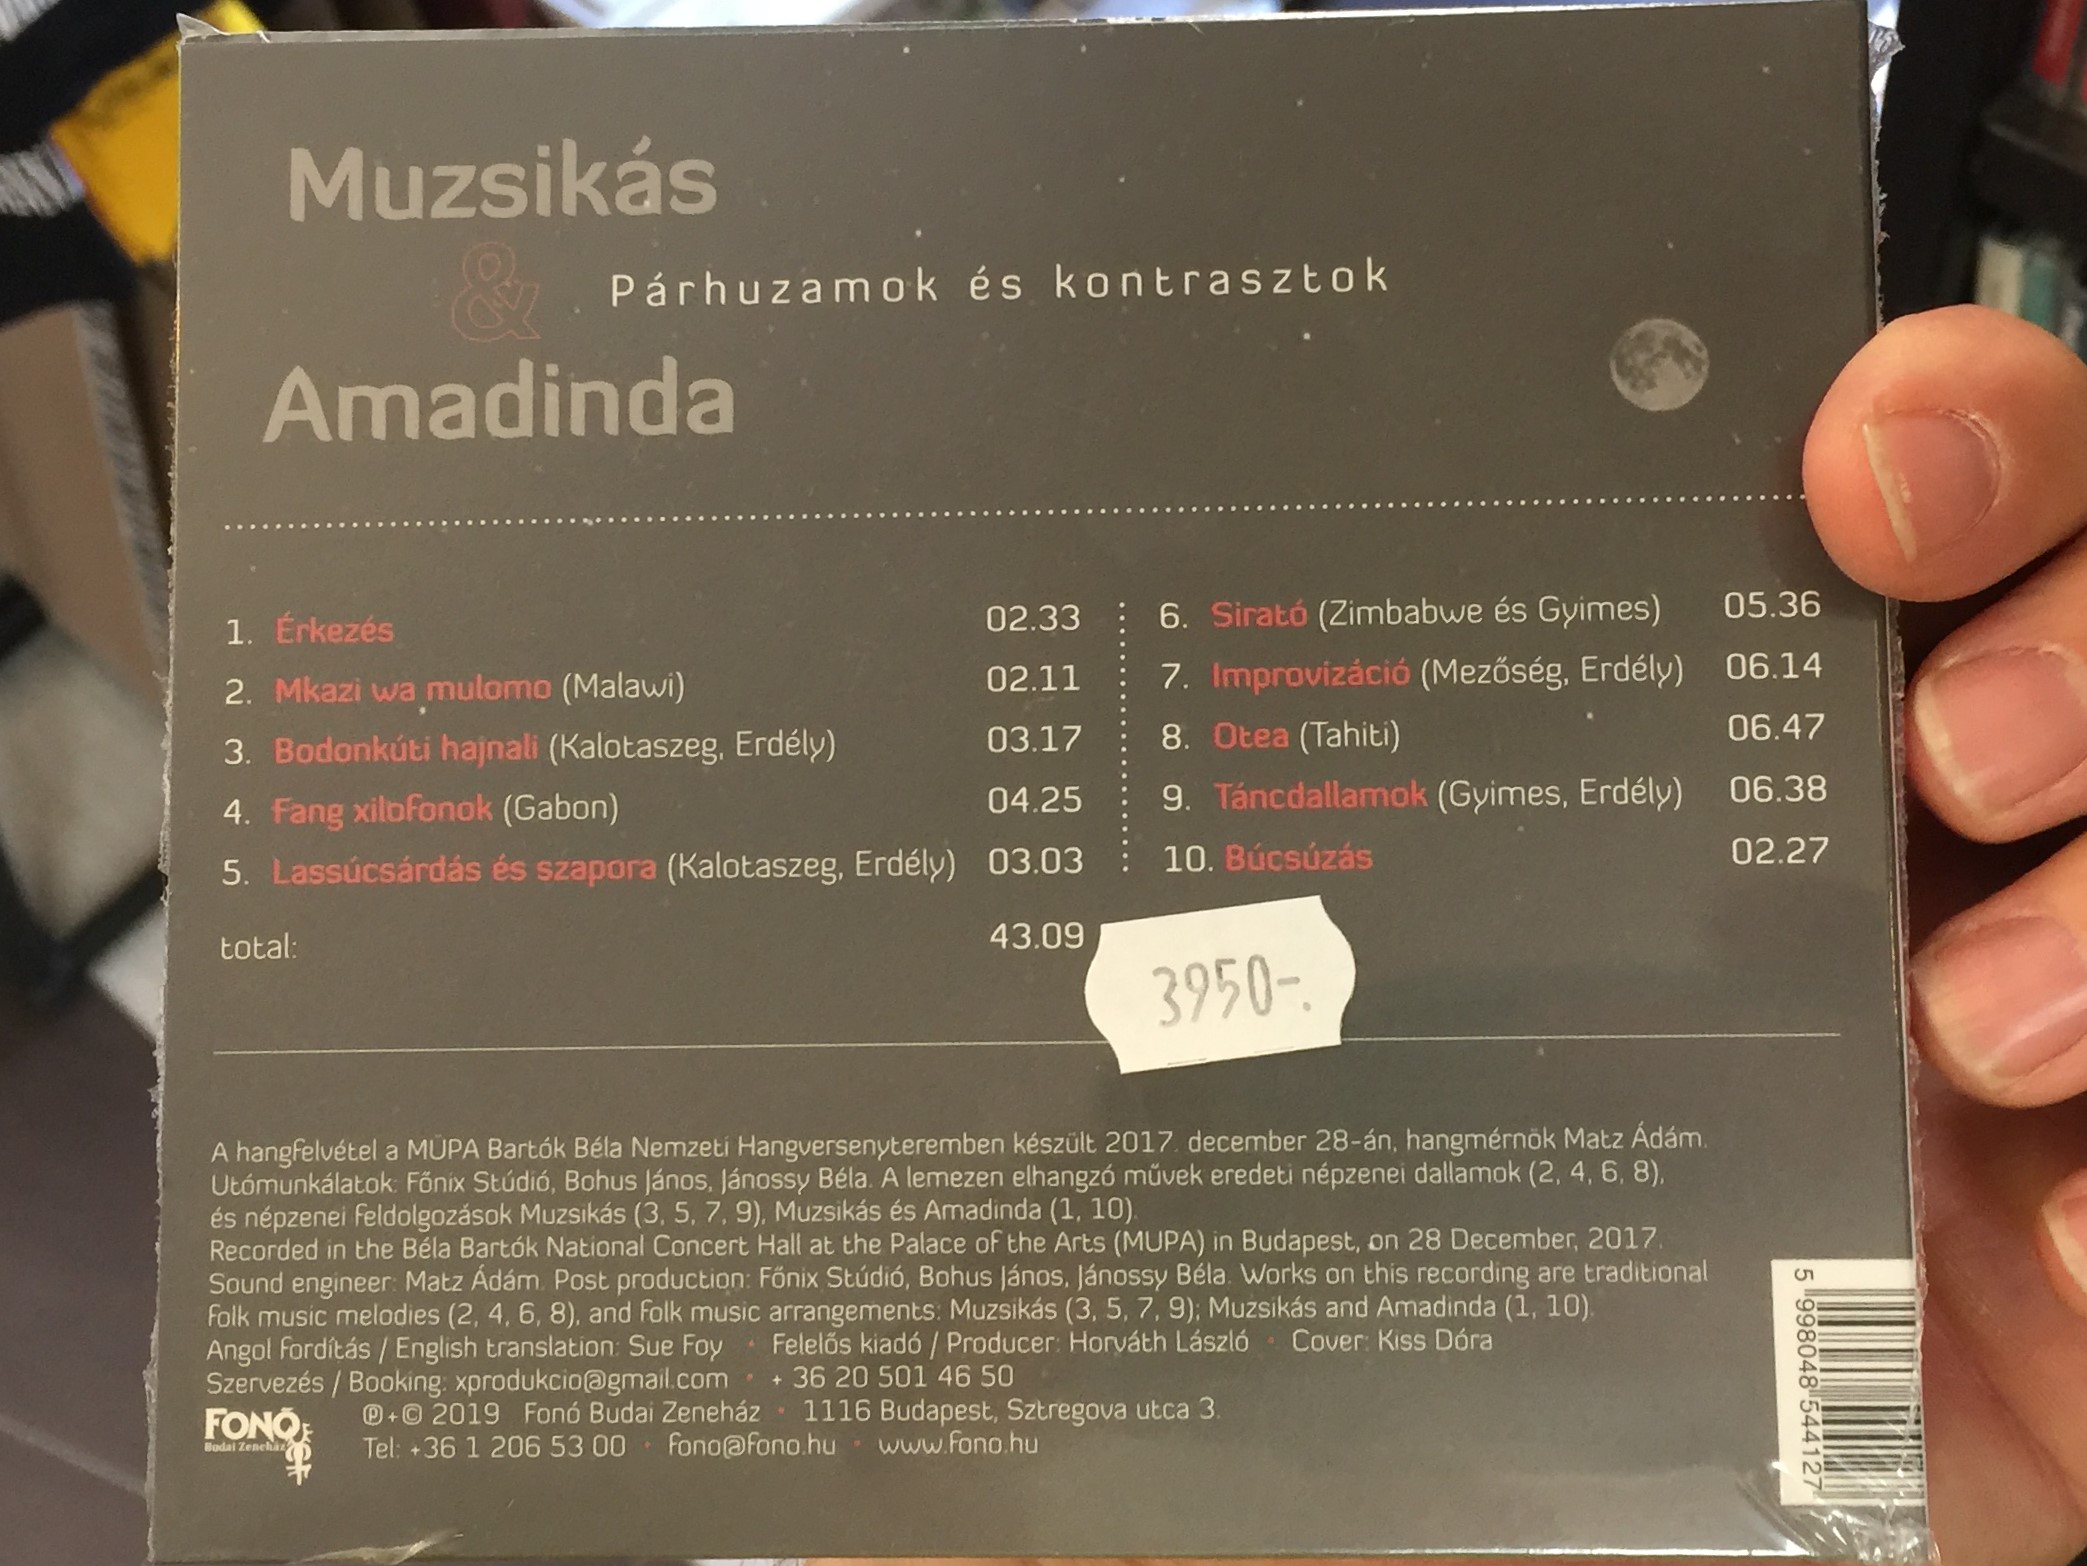 parhuzamok-es-kontrasztok-muzsikas-amadinda-fono-budai-zenehaz-audio-cd-2019-5998048544127-2-.jpg